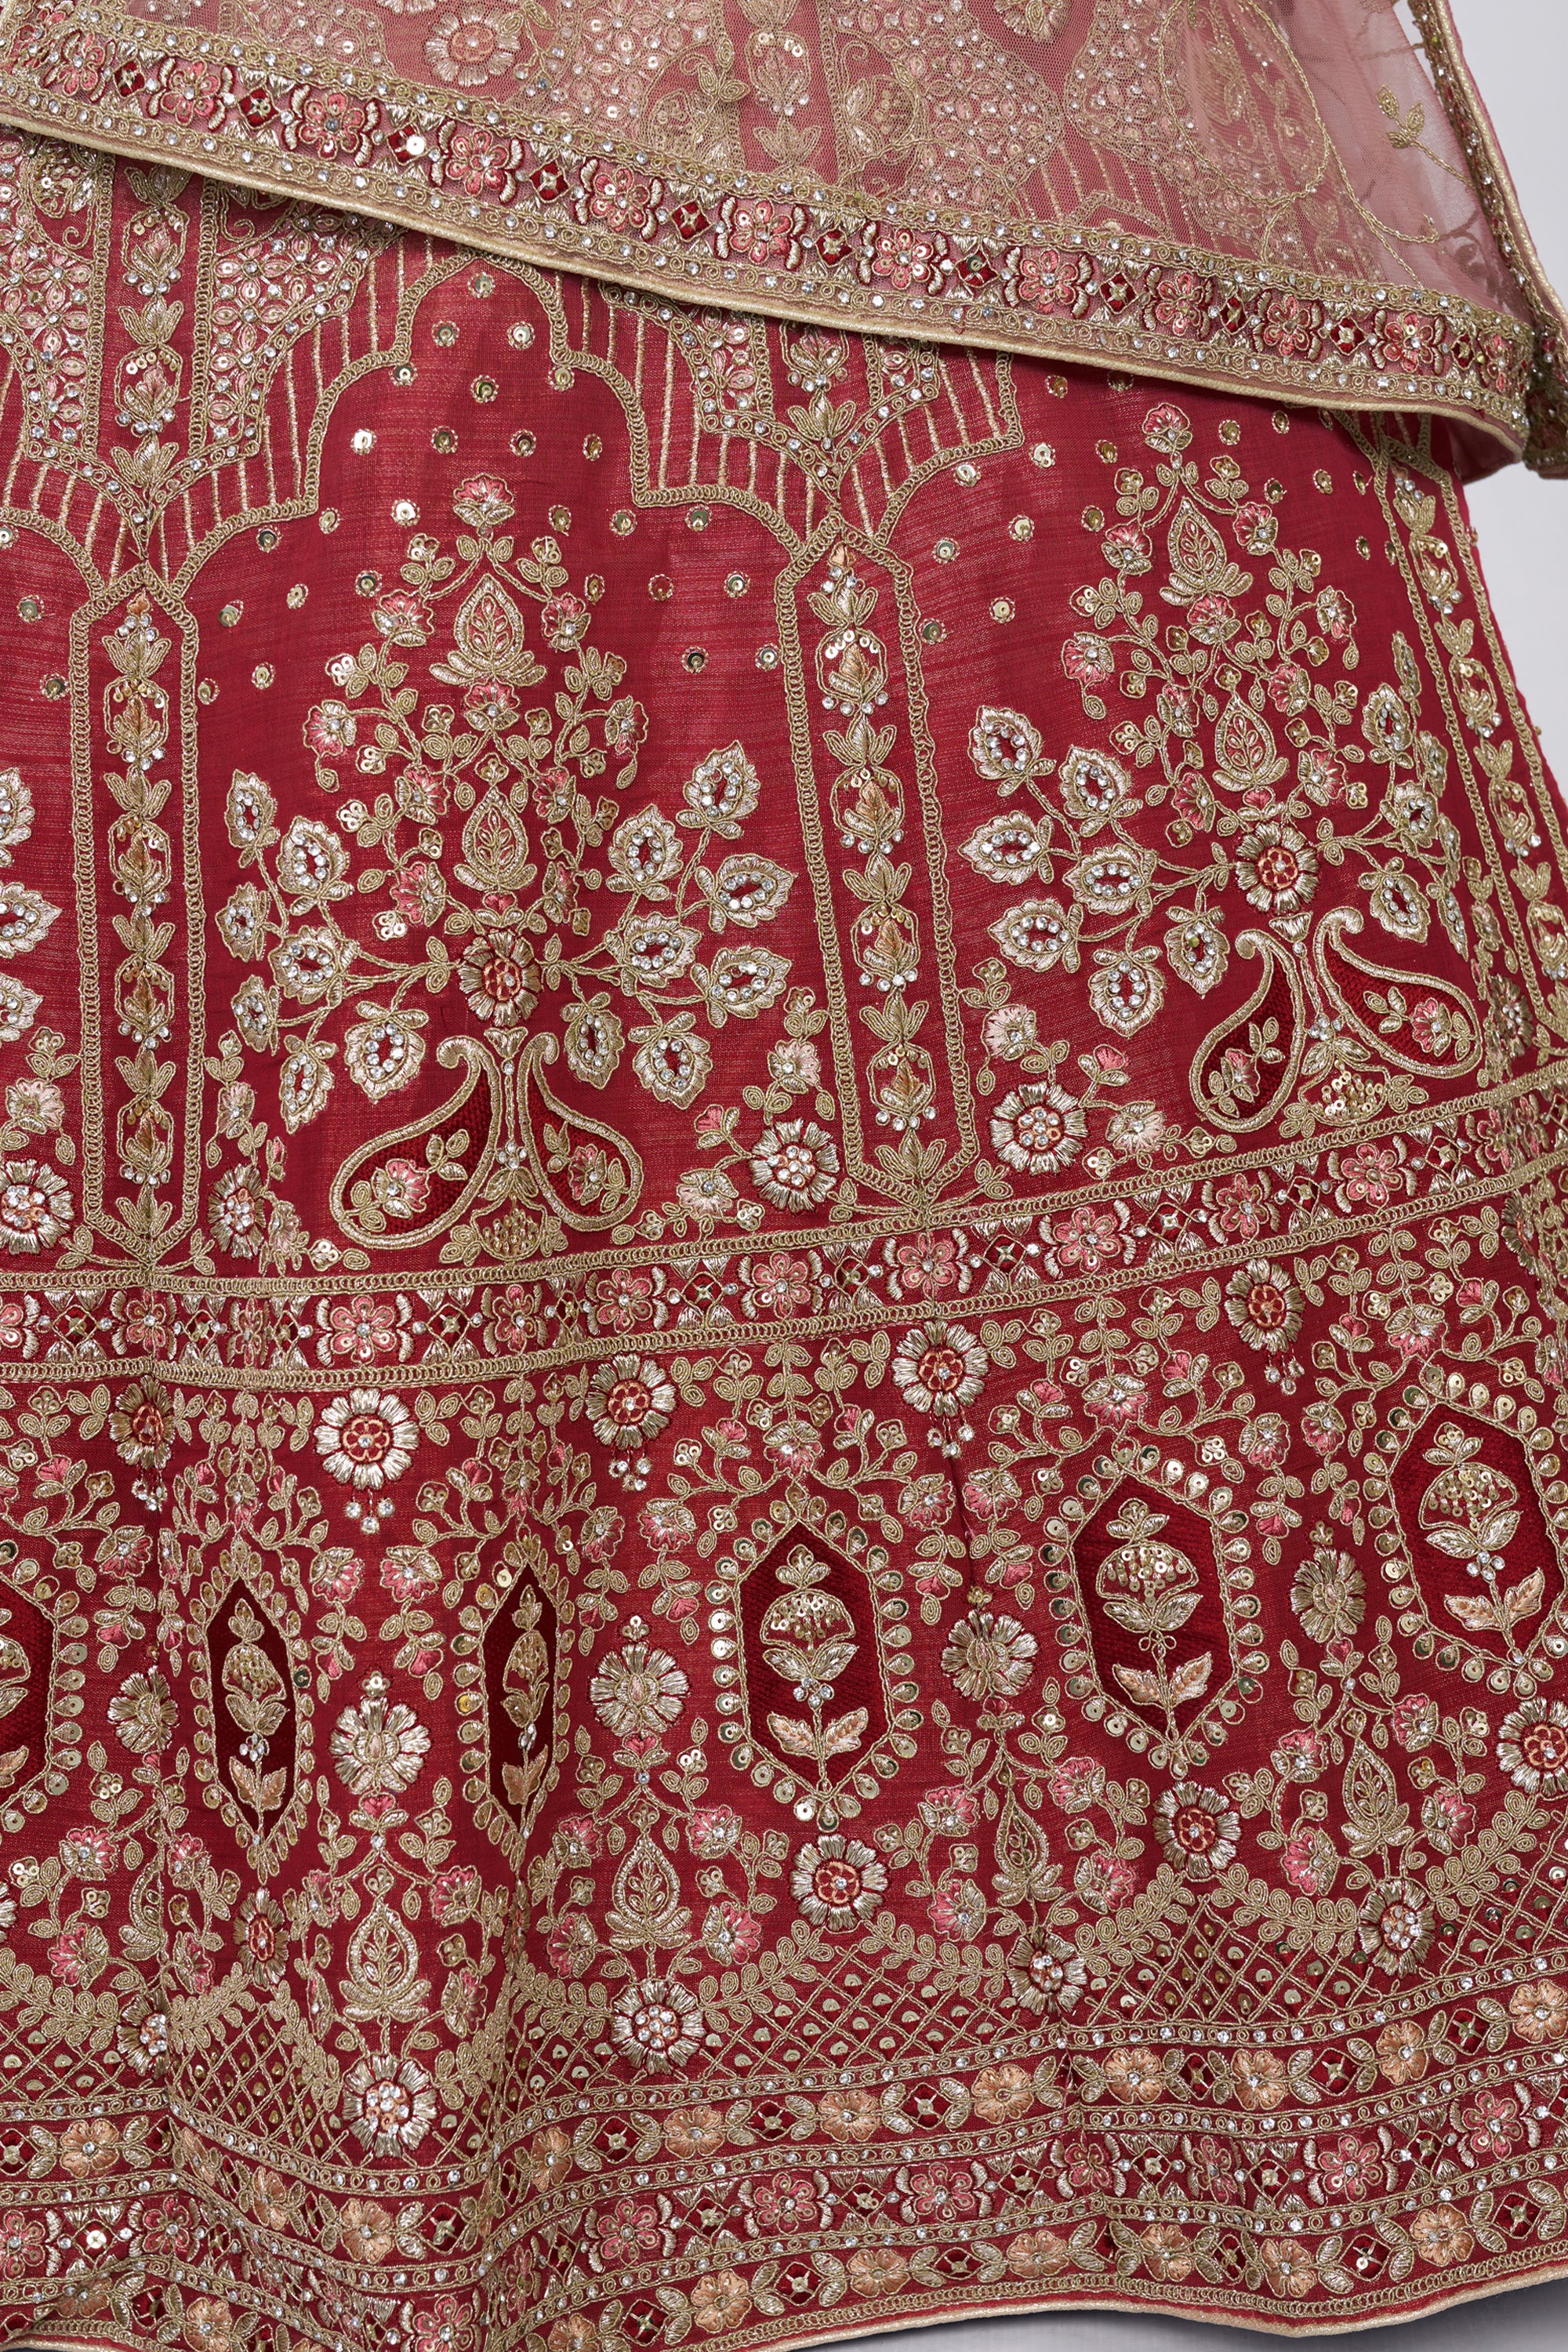 Women's Bridal Heritage Shaded Rust Heavy Embroidered Shaded Silk Designer Lehenga - CHITRAS